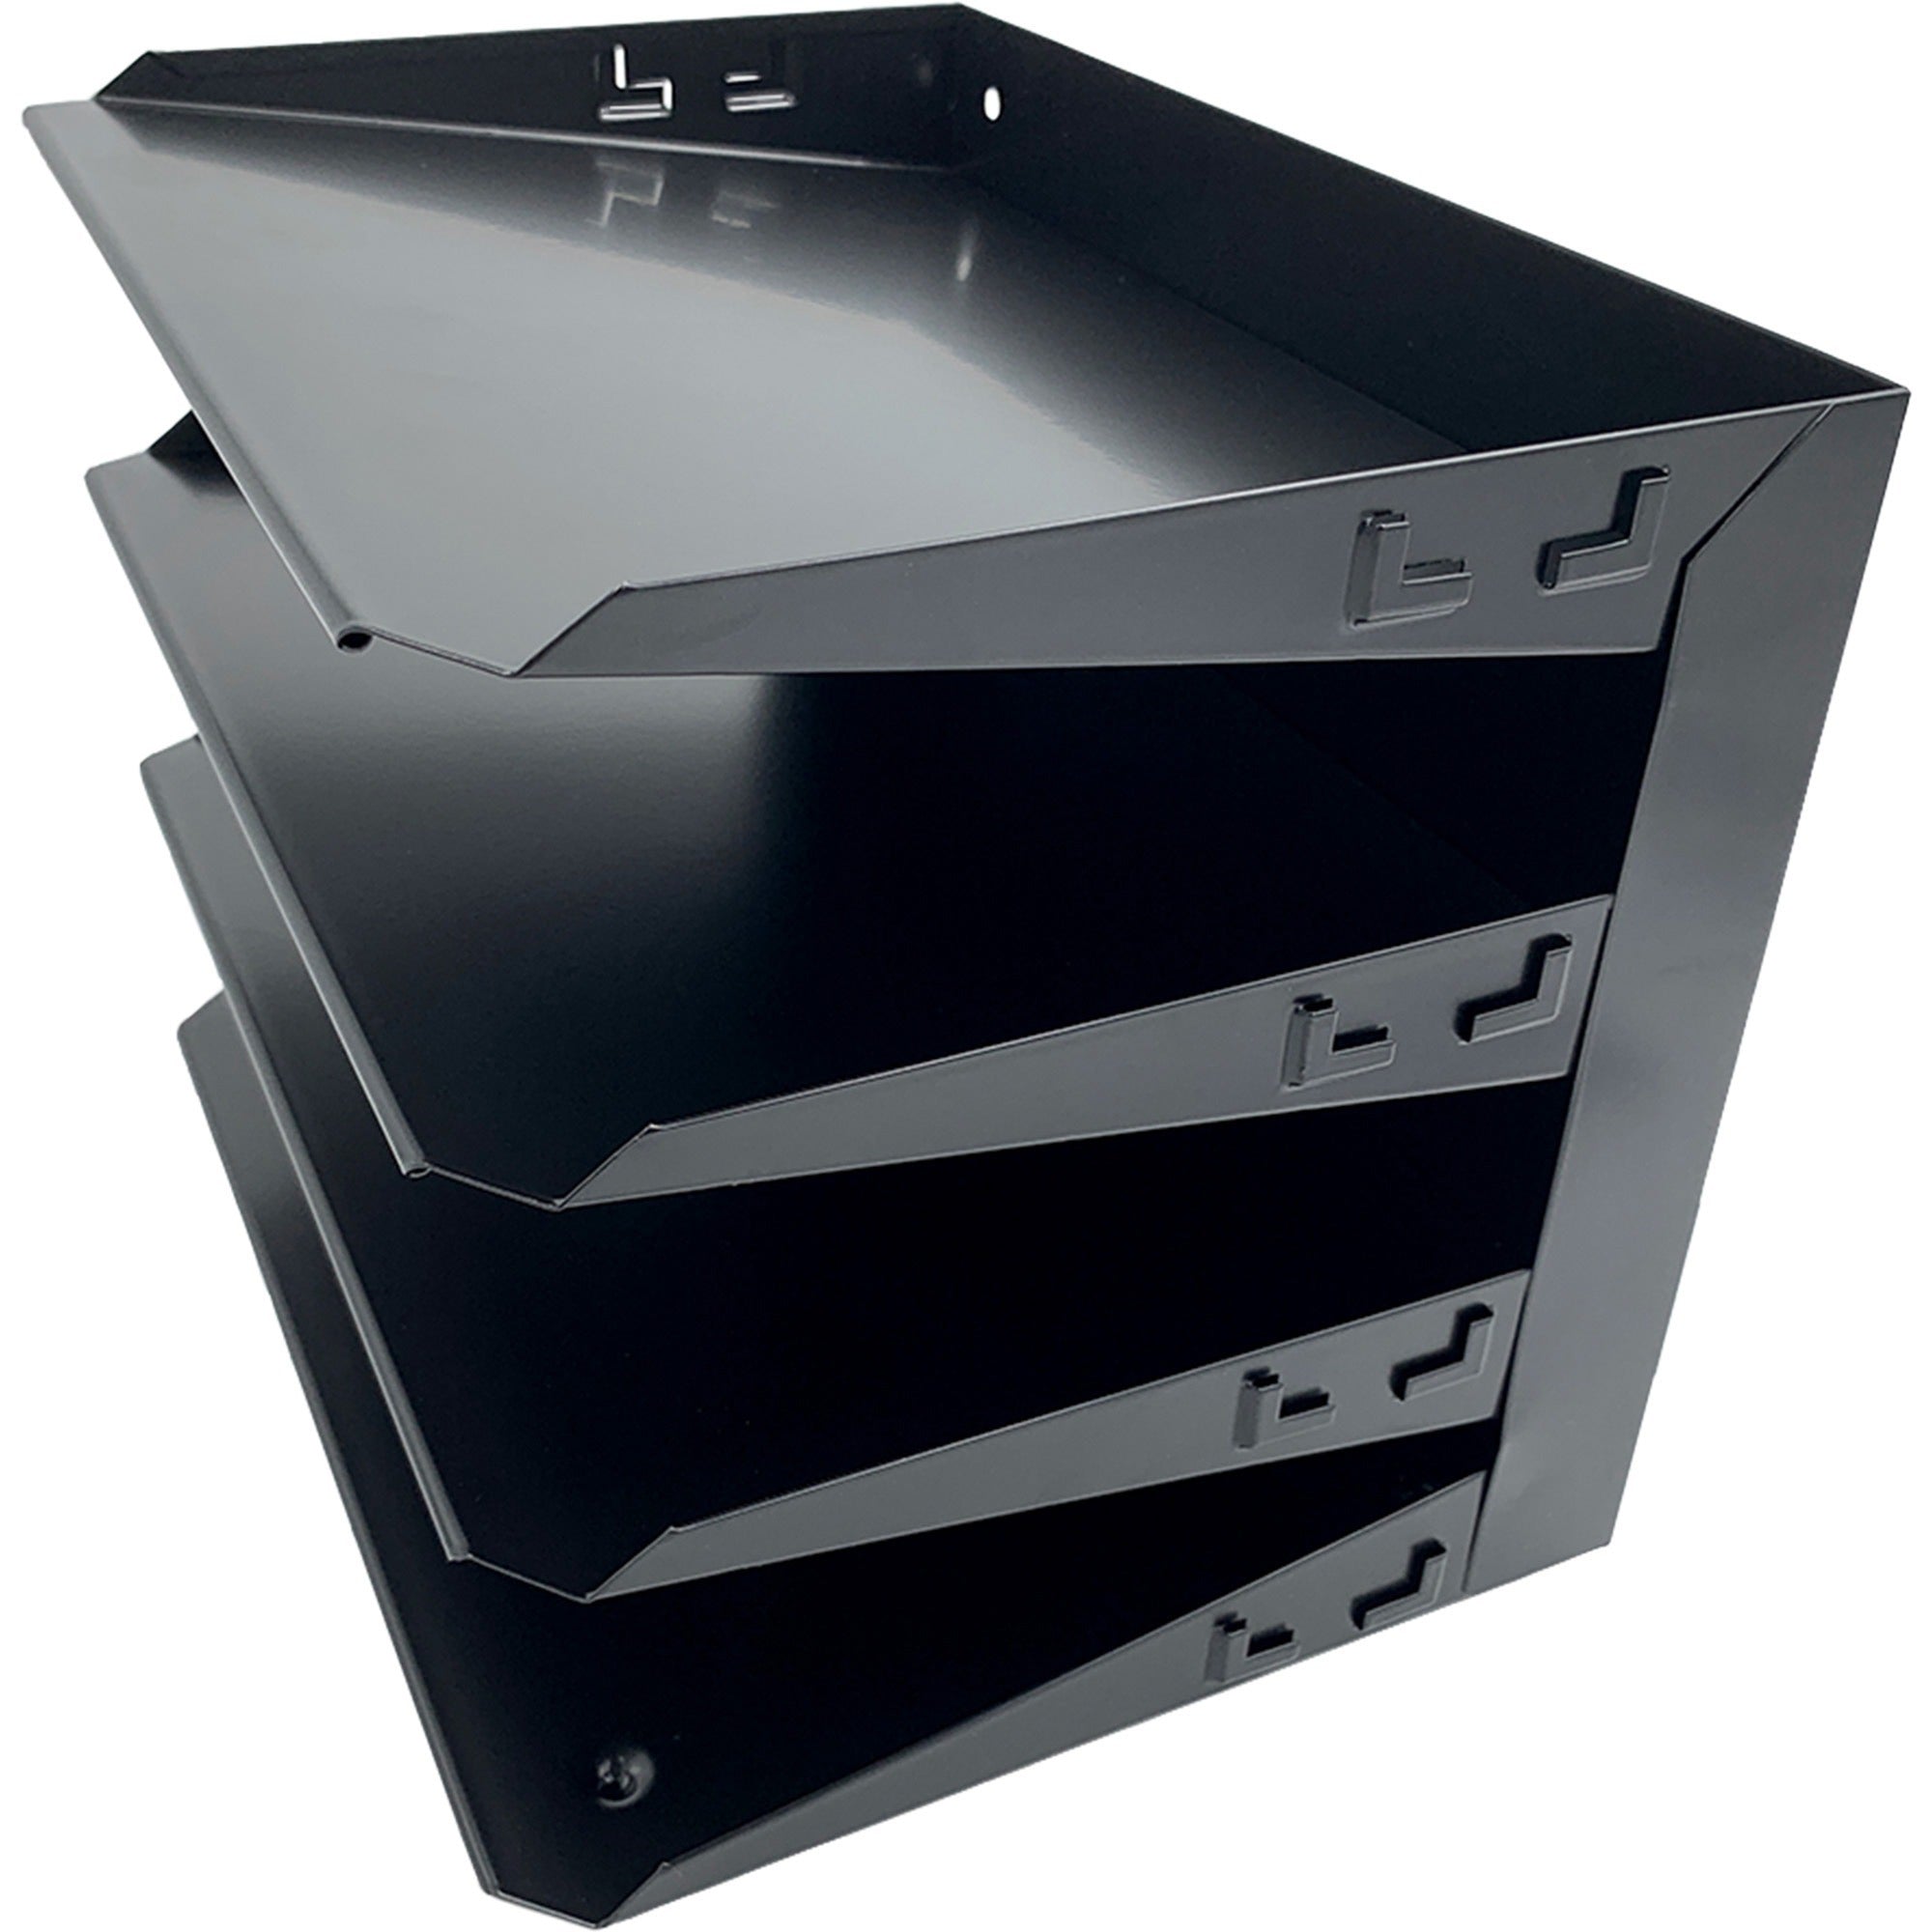 huron-horizontal-slots-desk-organizer-4-compartments-horizontal-9-height-x-12-width-x-87-depth-durable-black-steel-1-each_hurhasz0152 - 1